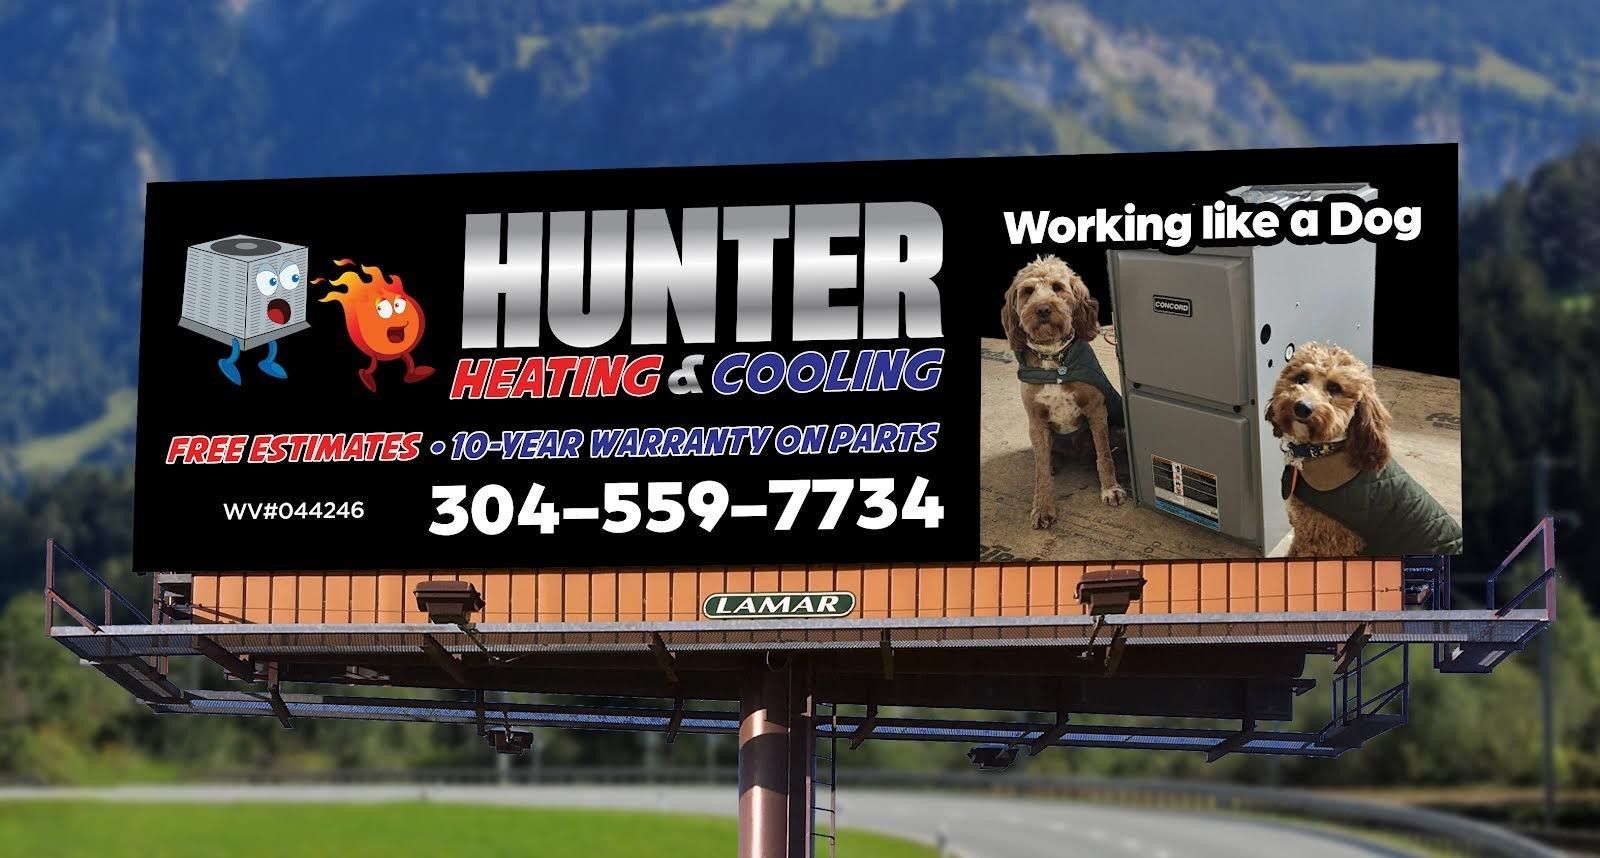 Hunter Heating & Cooling flyer